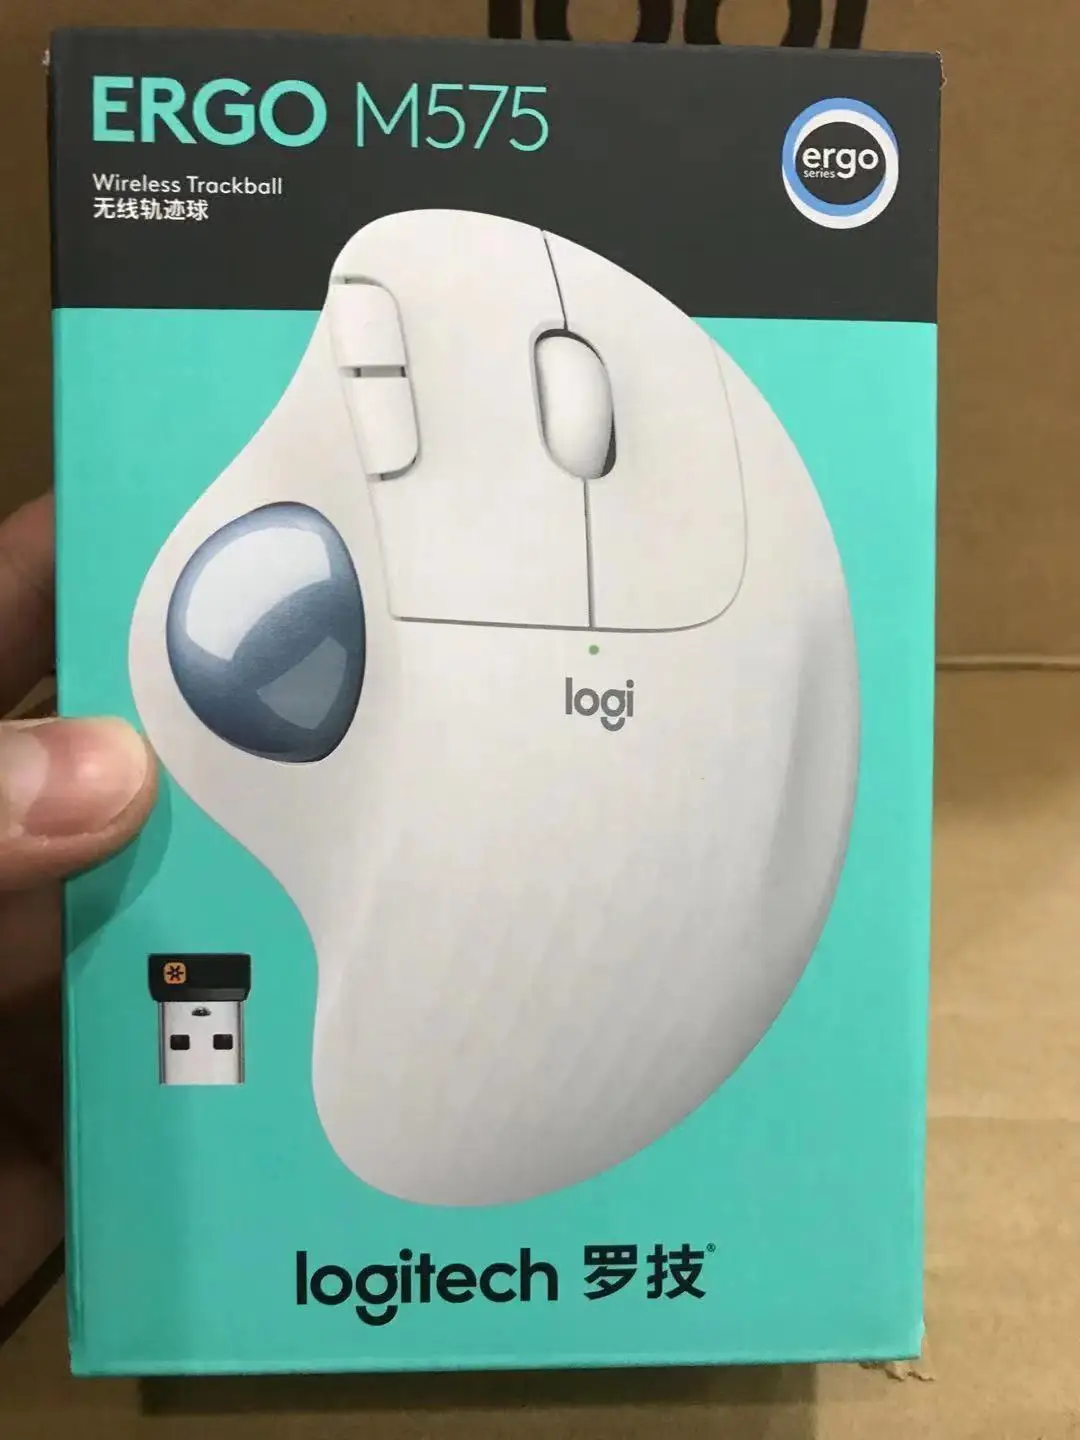 Logitech ERGO M575 Wireless Trackball Mouse| Alibaba.com